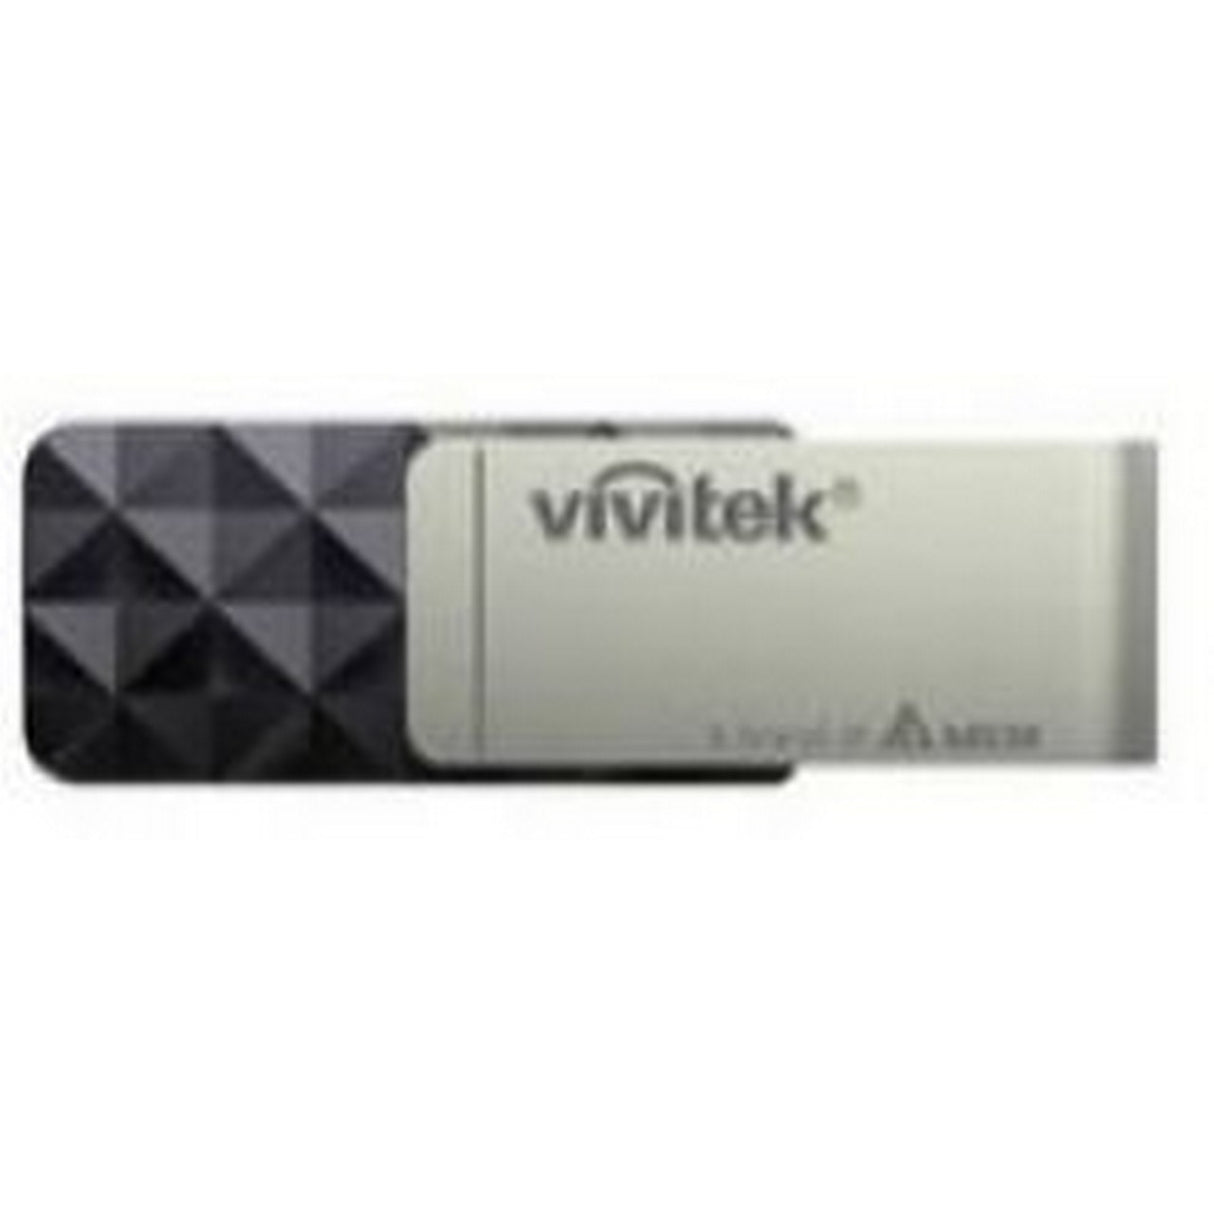 Vivitek QuickLaunch | USB Installer for NovoConnect or NovoPro